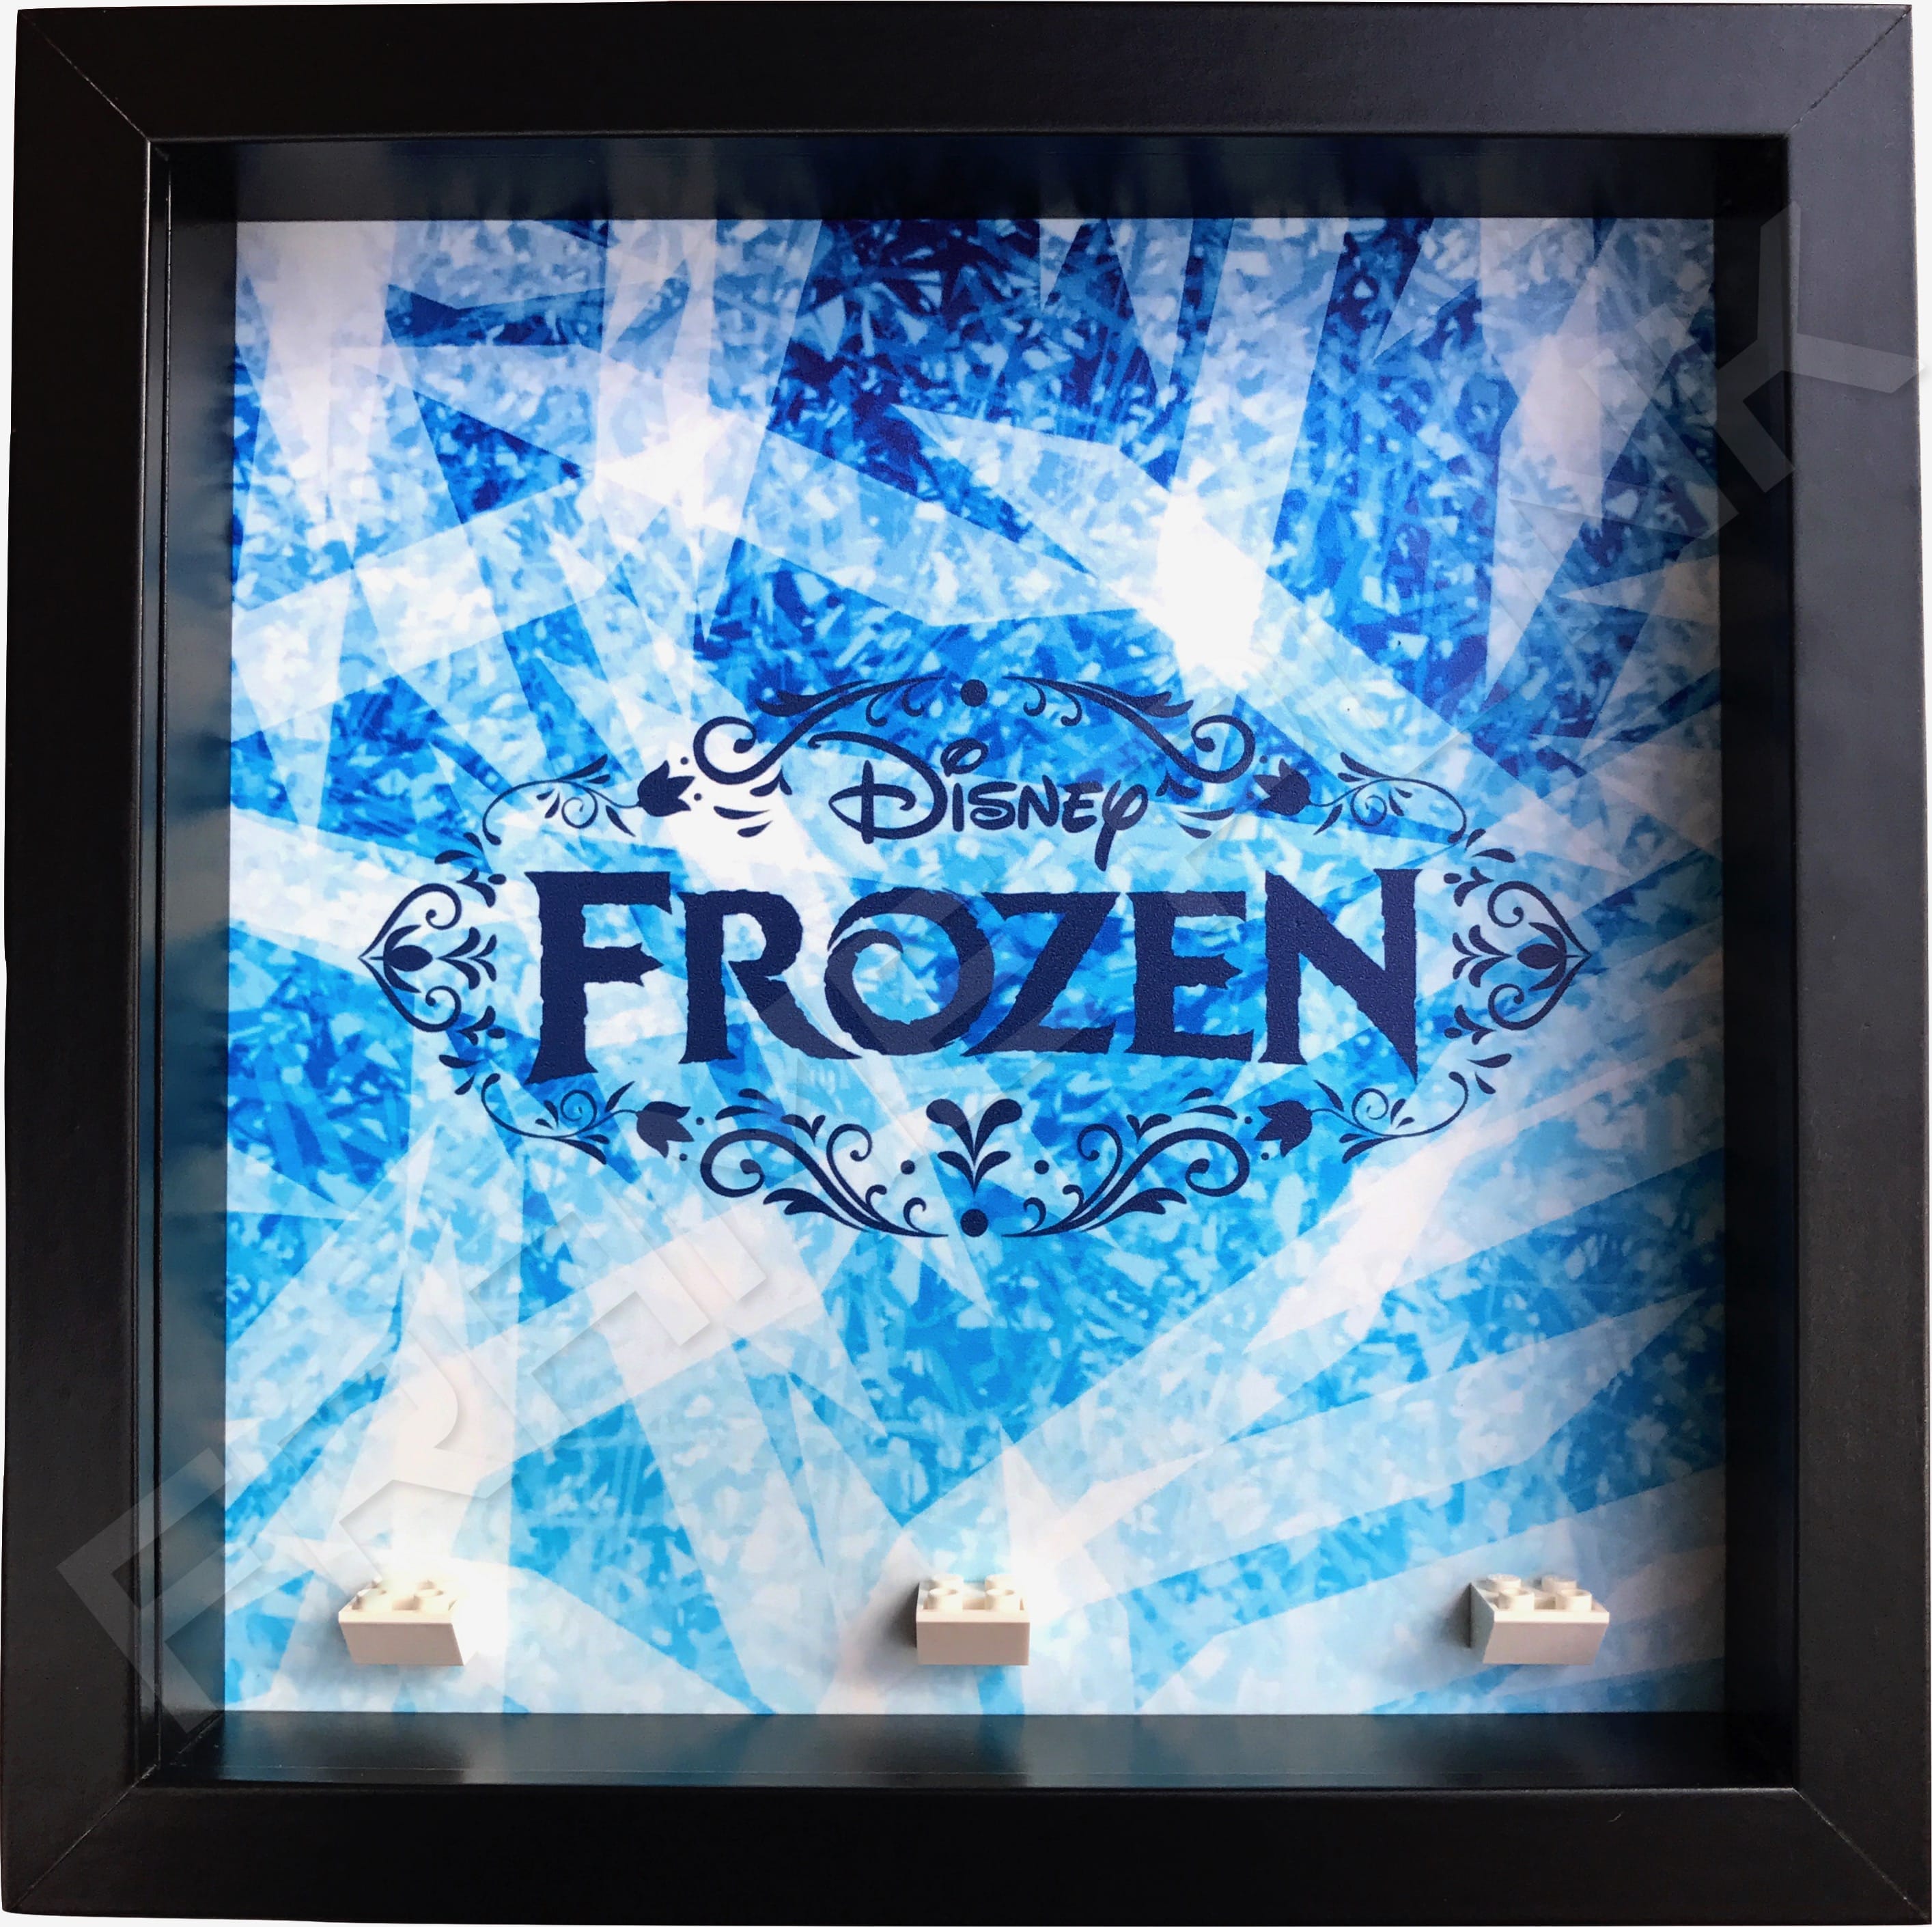 Frozen Lego minifigures display frame (Black)